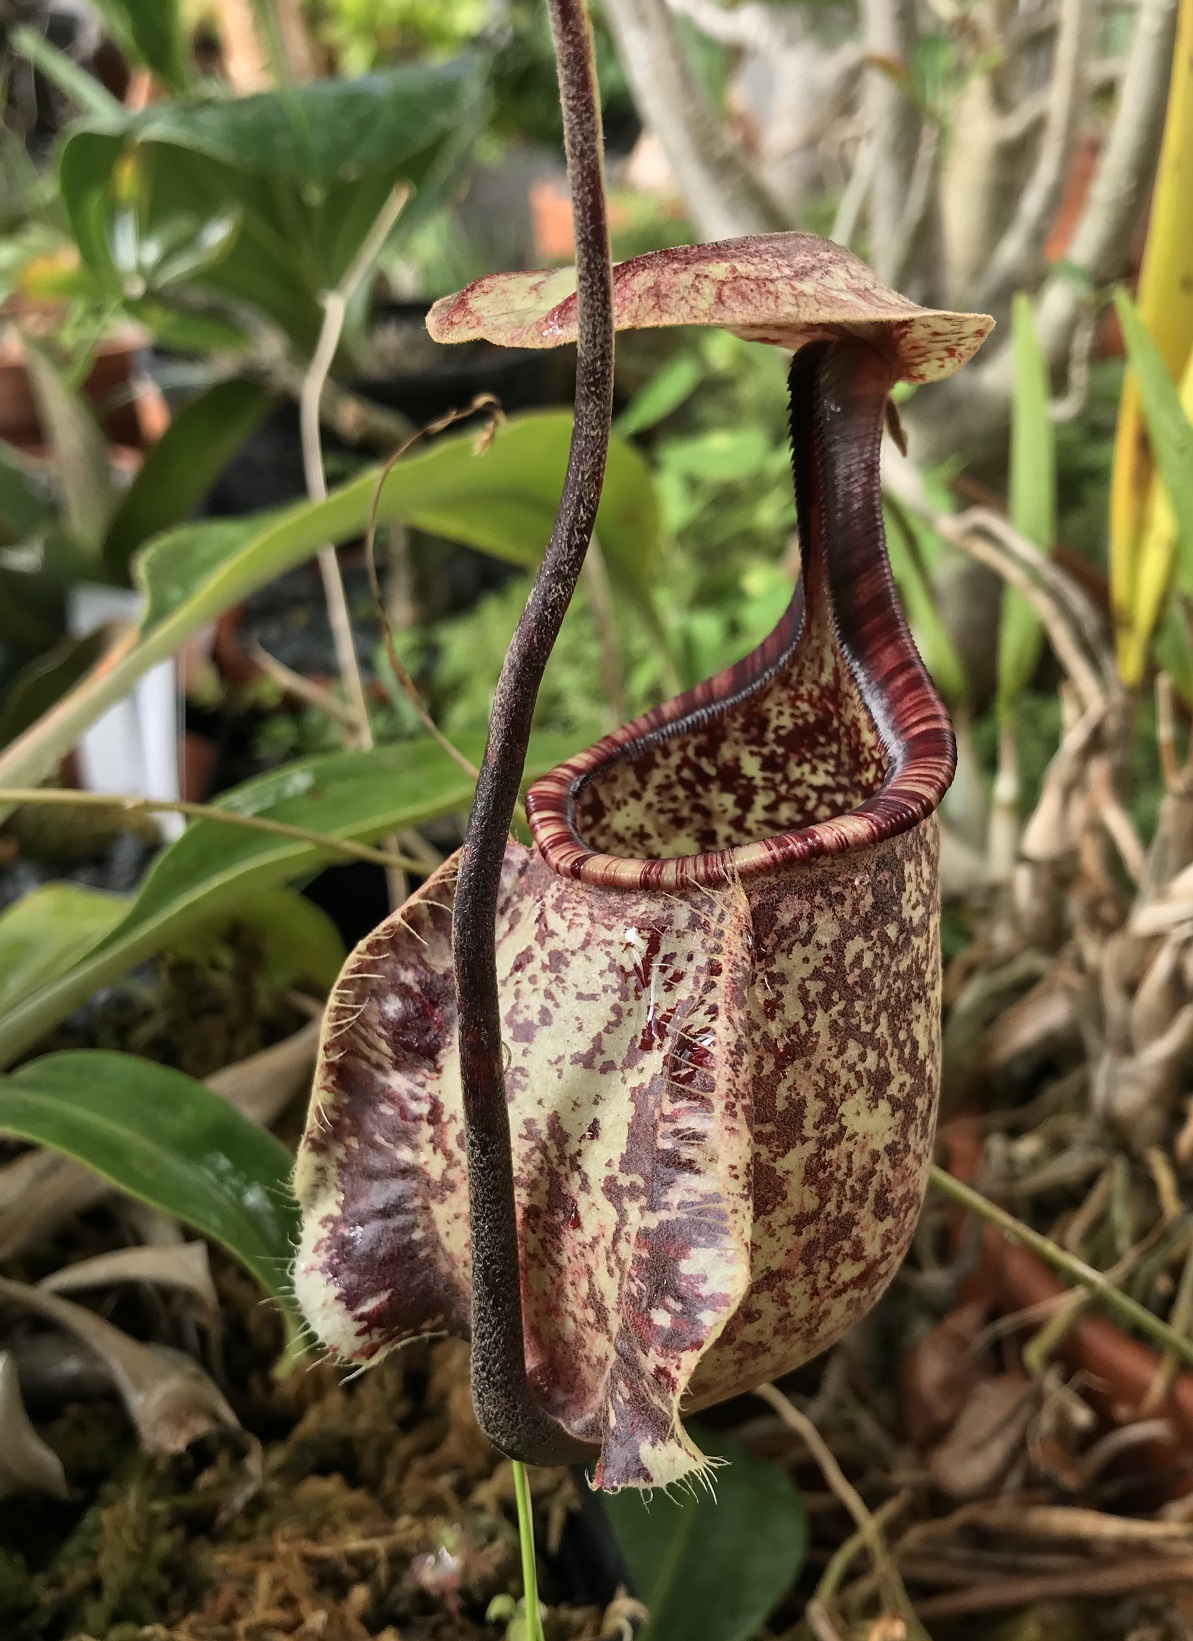 Nepenthes rafflesiana lower pitcher